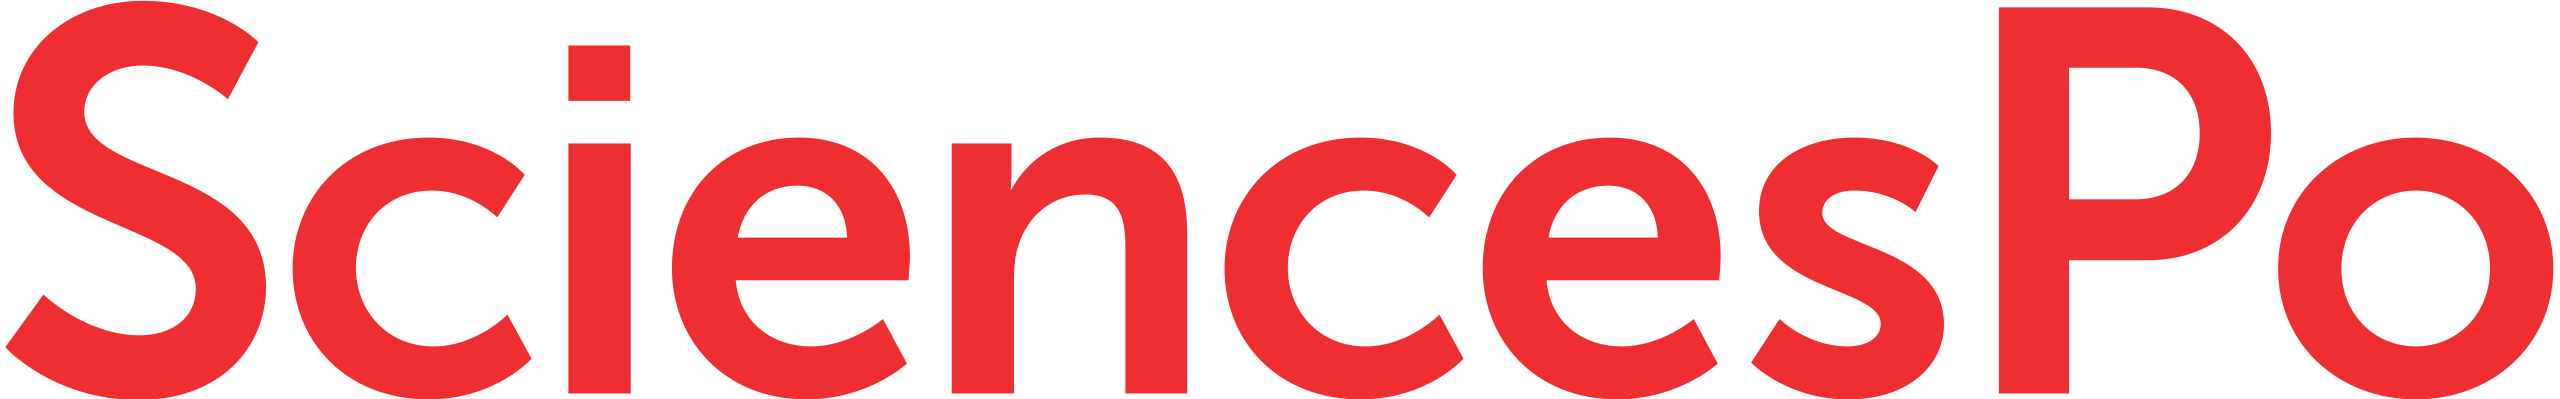 logo sciencespo